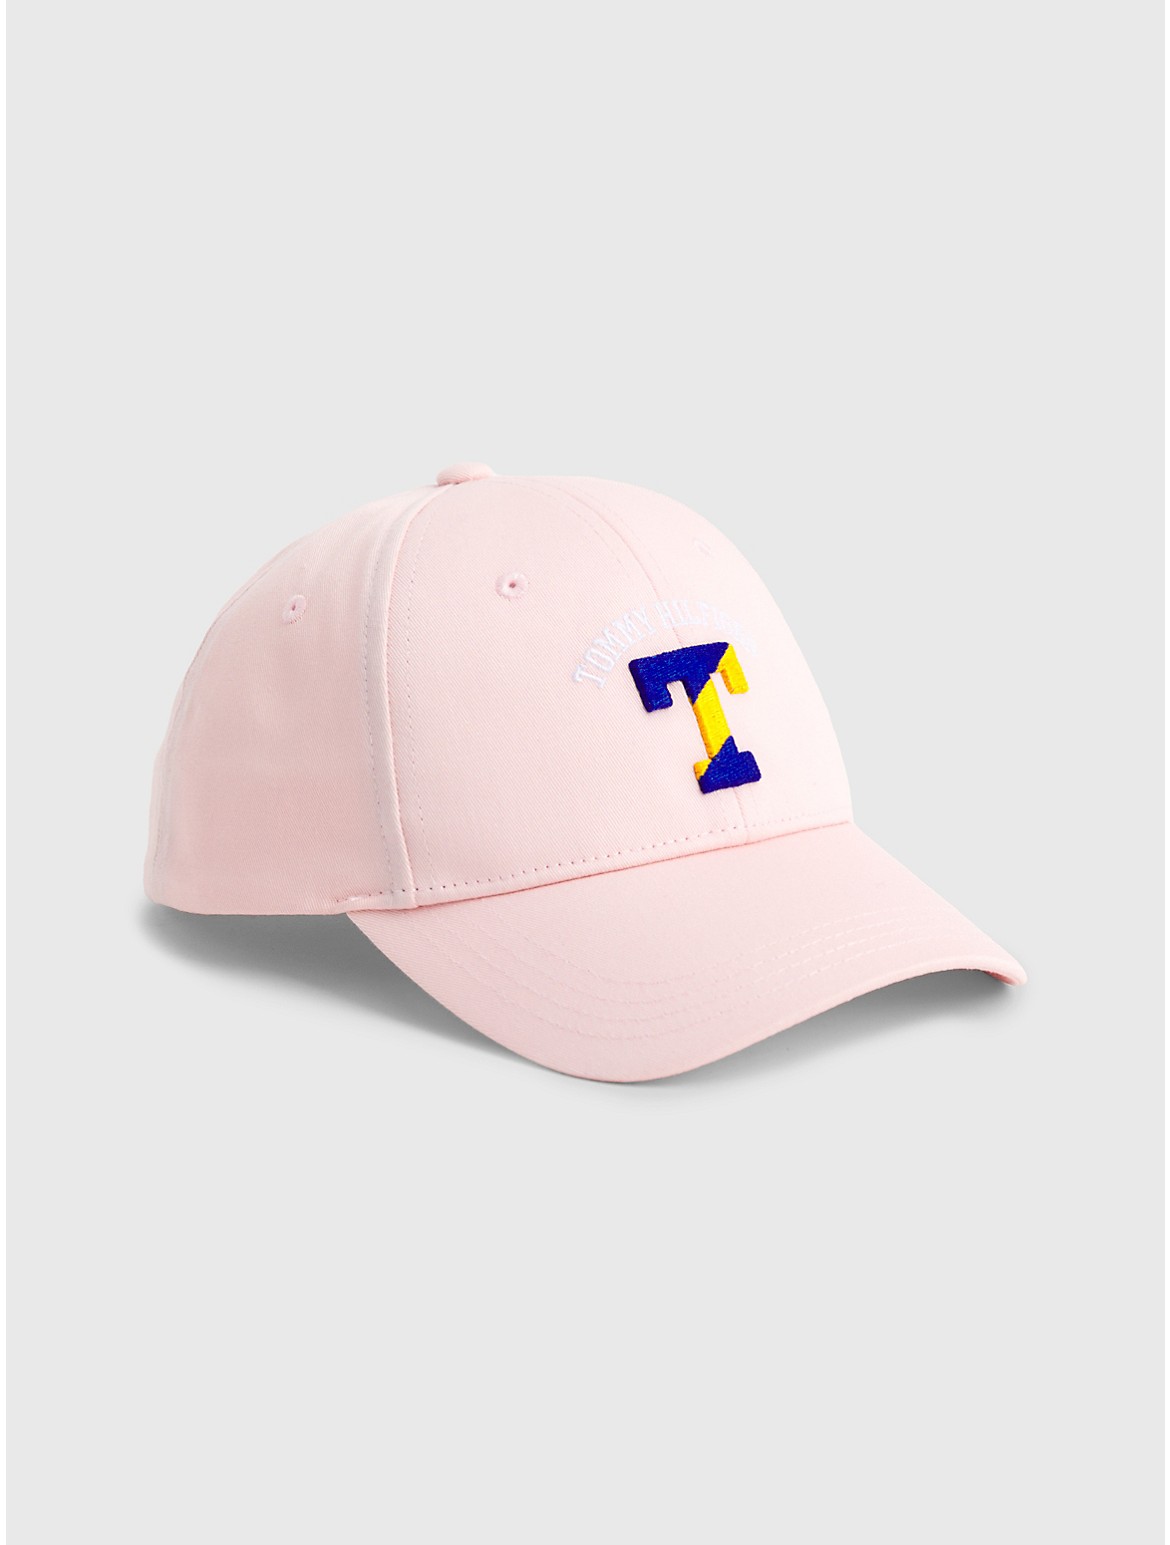 Tommy Hilfiger Kids' Varsity Cap - Pink - S-M